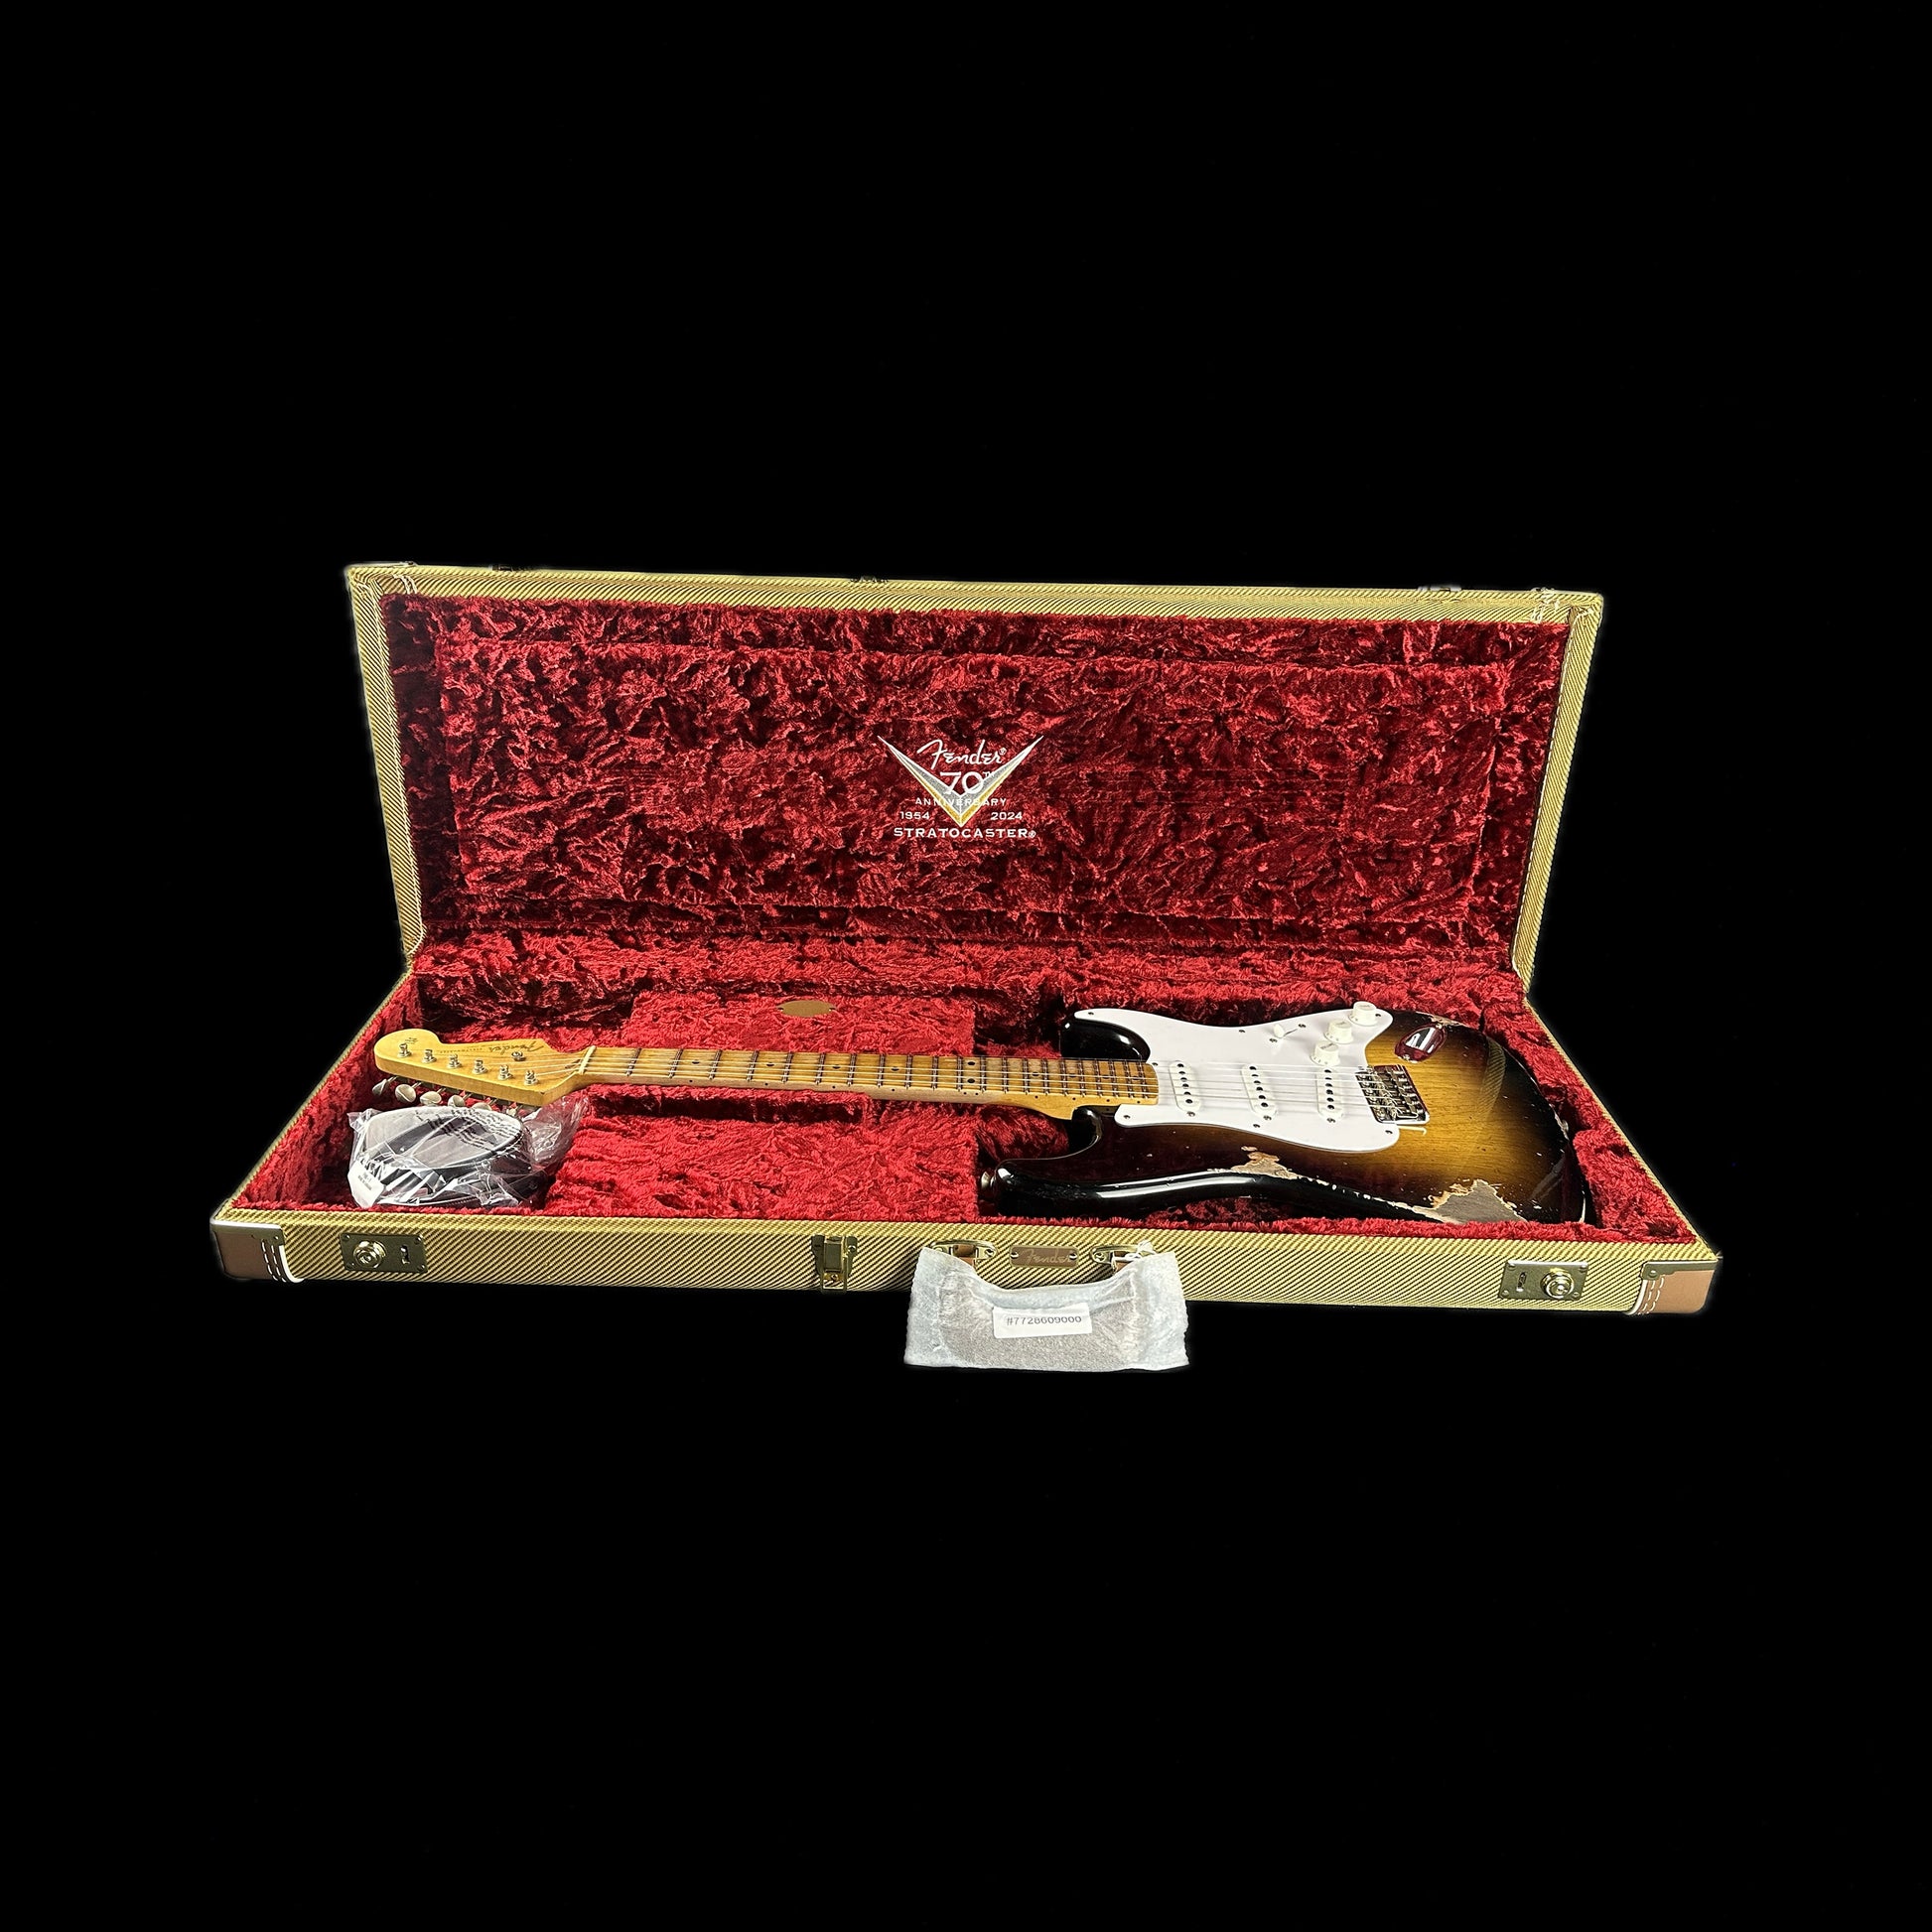 Fender Custom Shop LTD 70th Anniversary 1954 Stratocaster Heavy Relic 2-Color Sunburst in case.